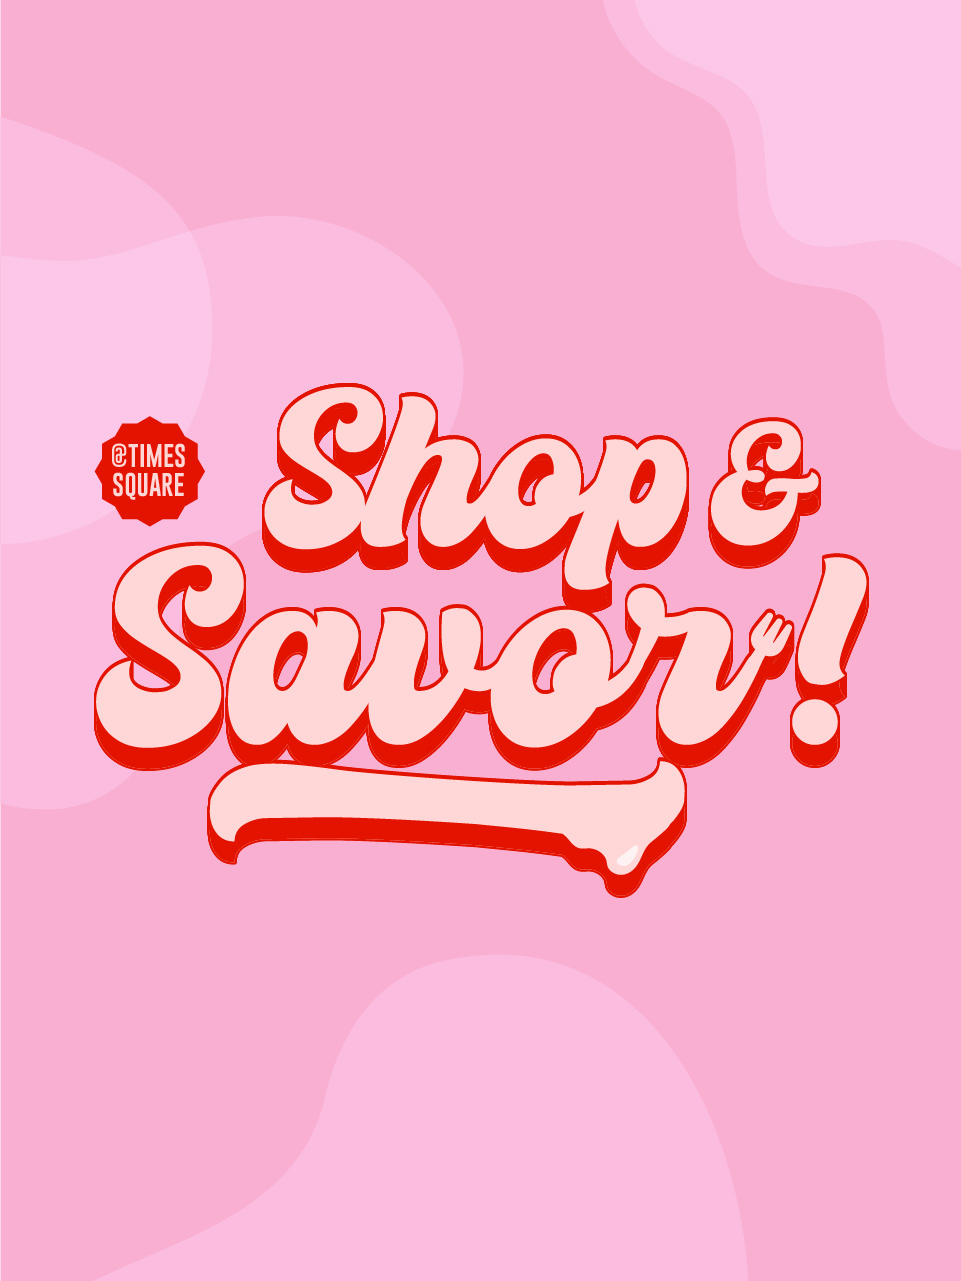 Shop & Savor!